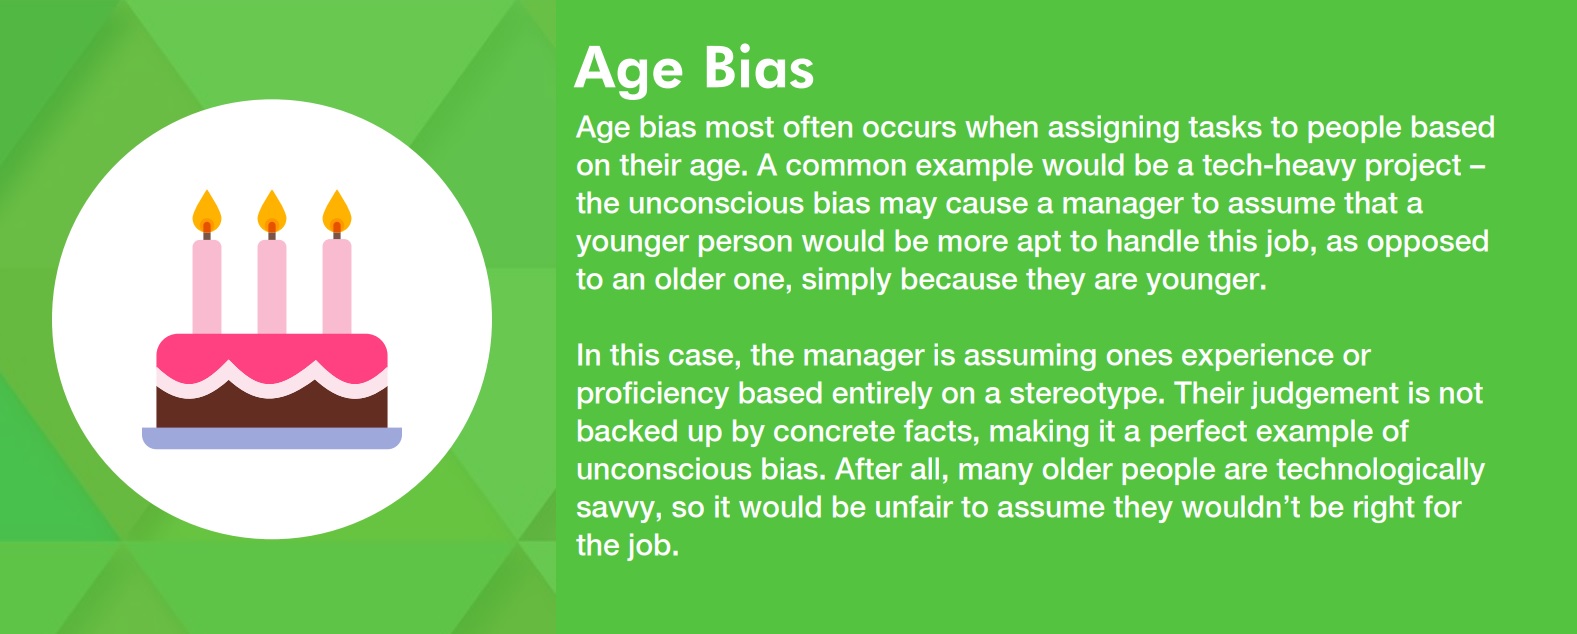 Unconscious Bias - Age Bias